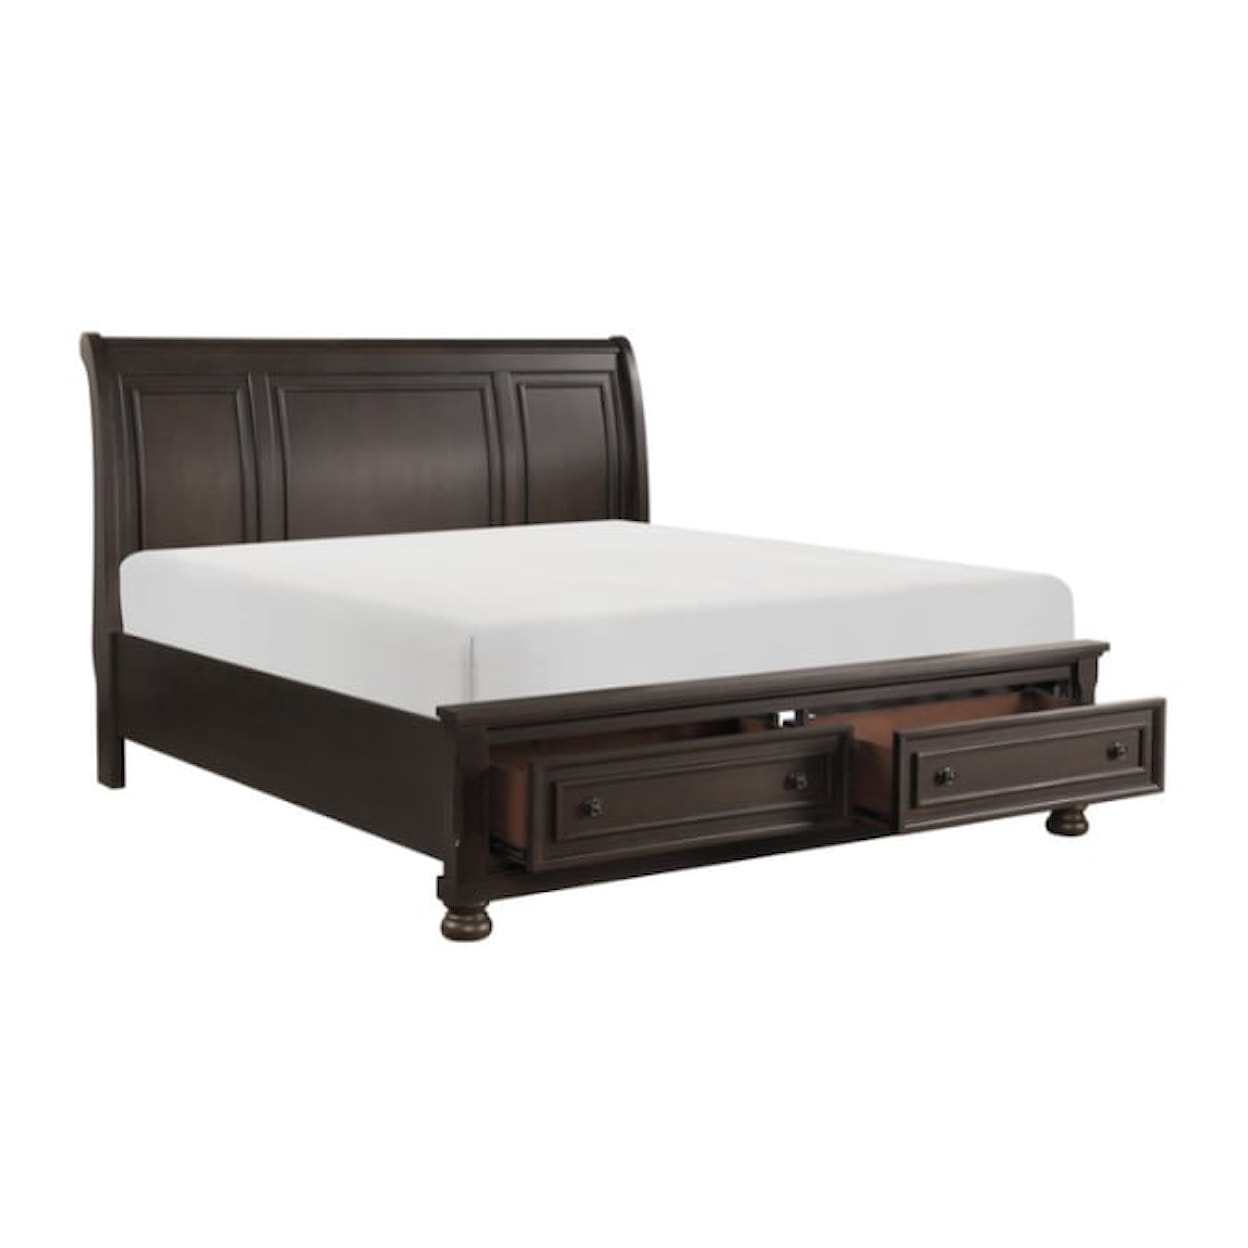 Homelegance Furniture Begonia Queen Bedroom Set